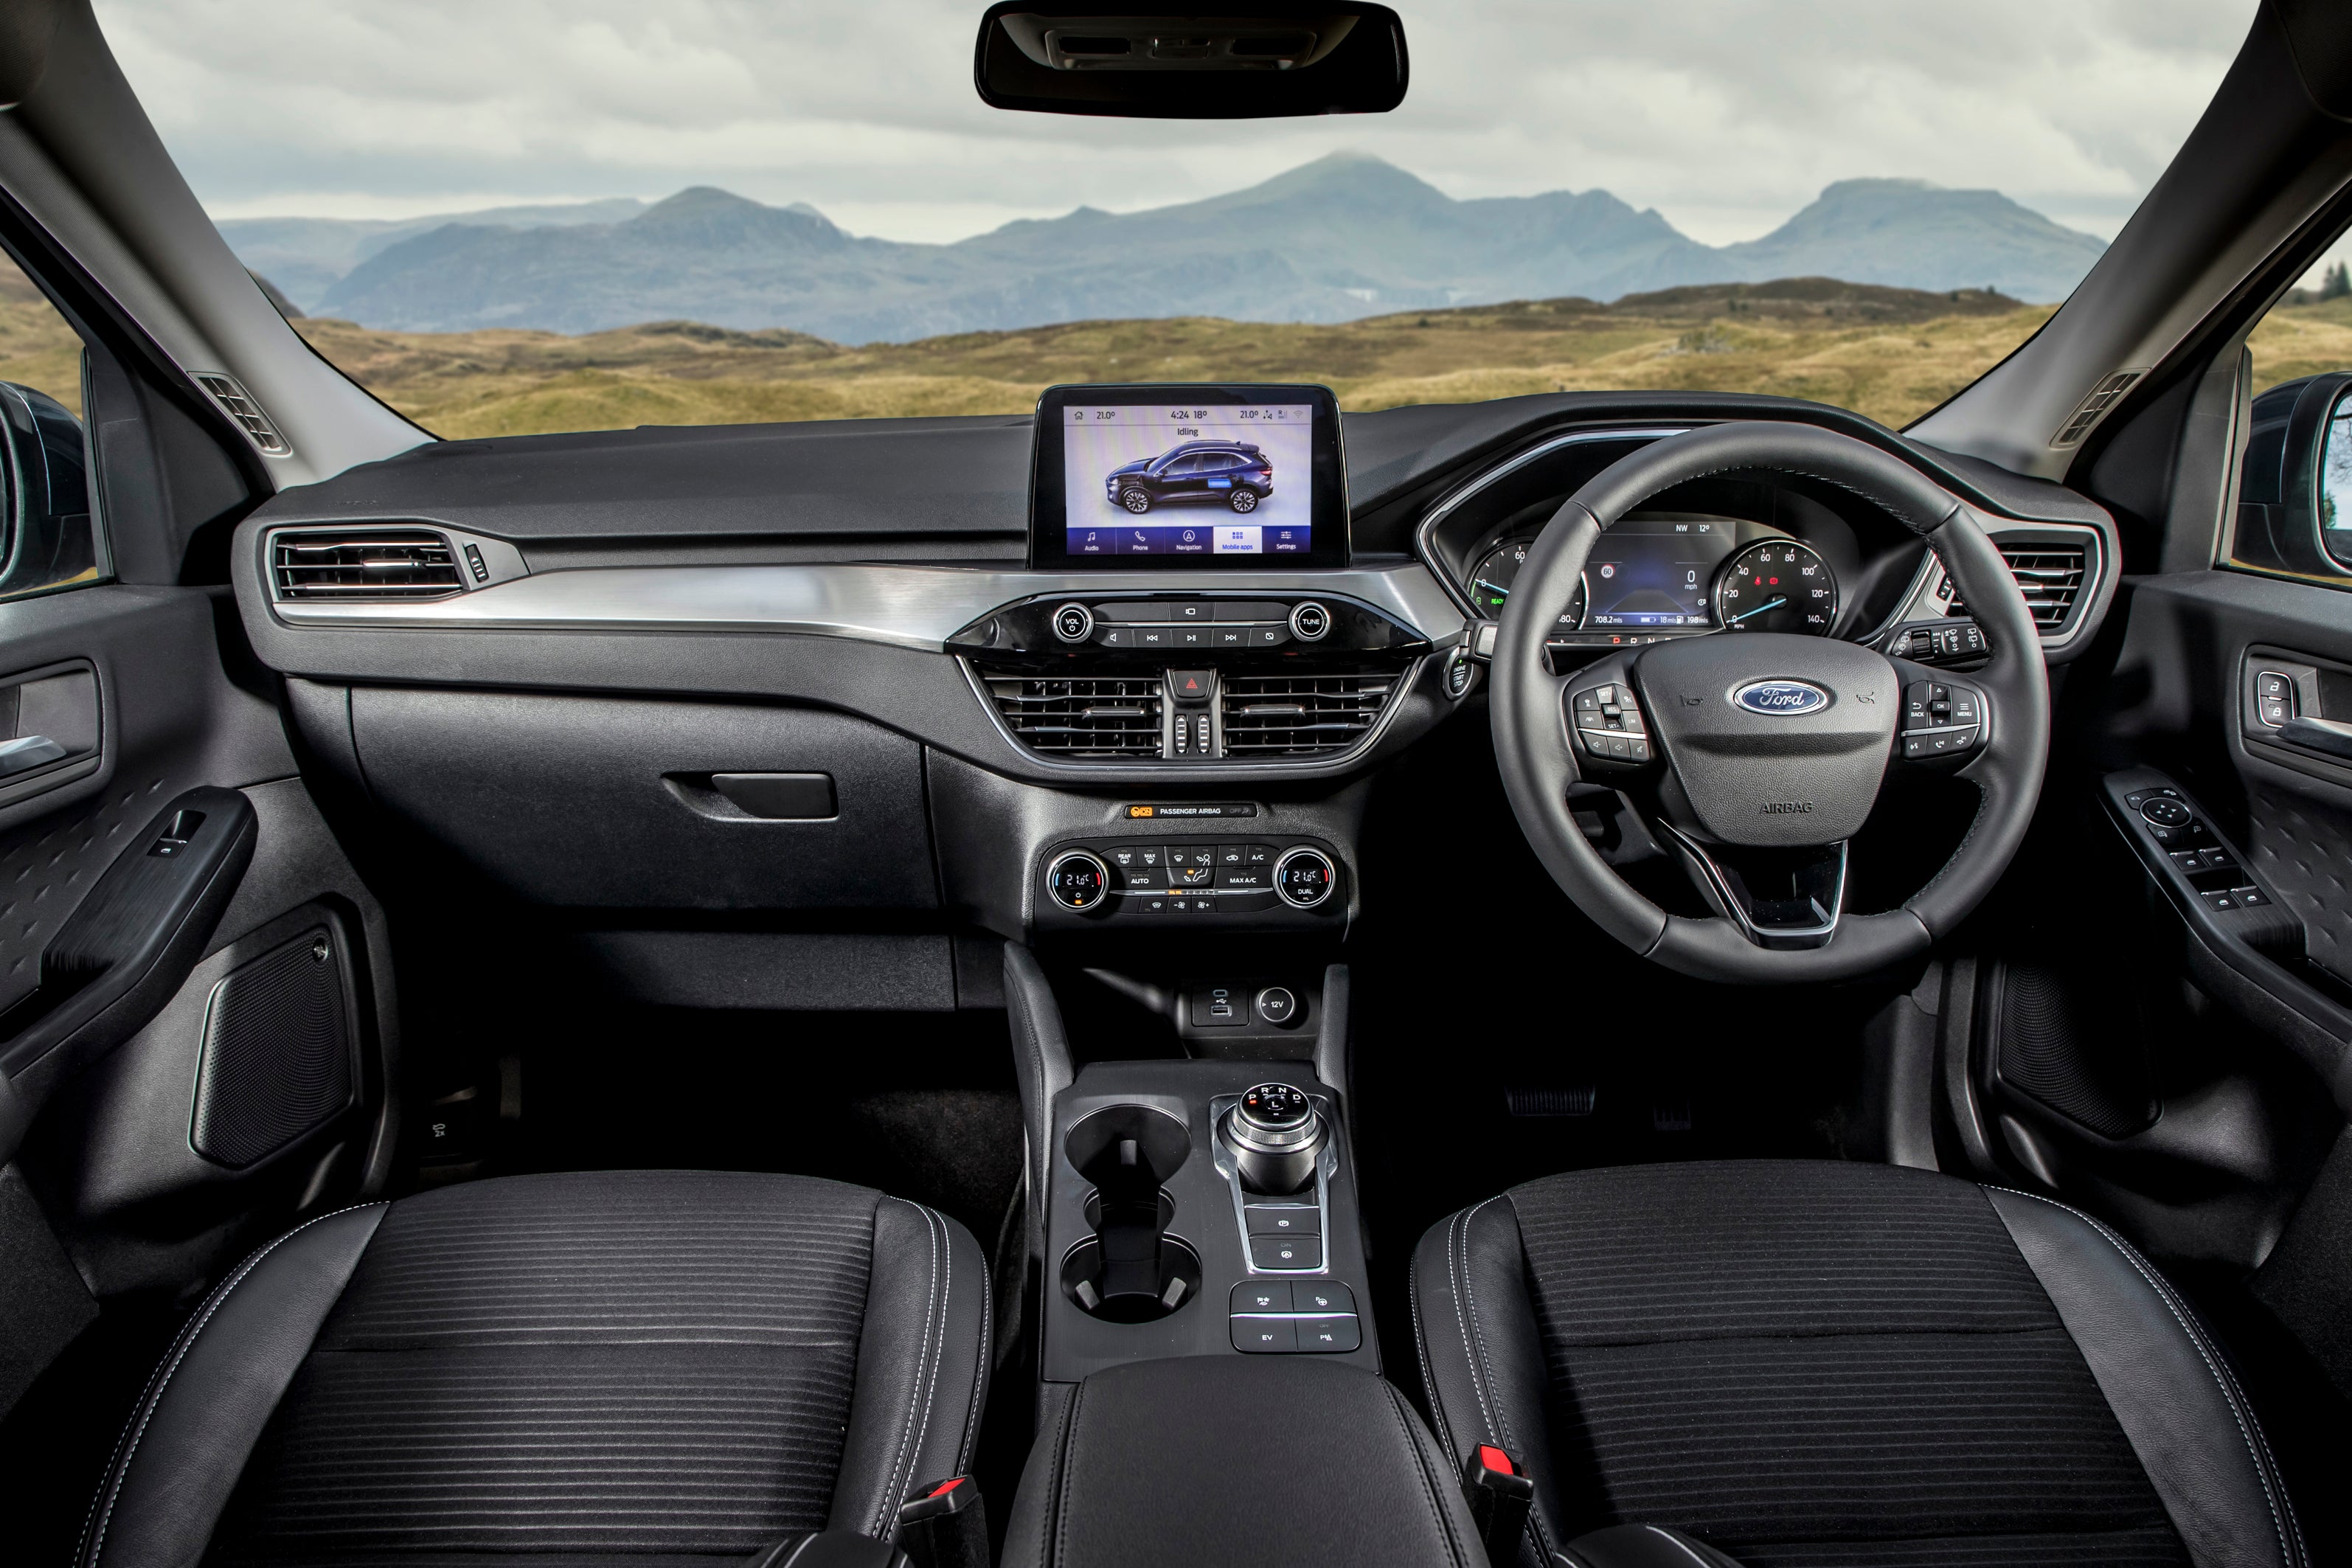 Ford Kuga Review 2022: Interior and dashboard